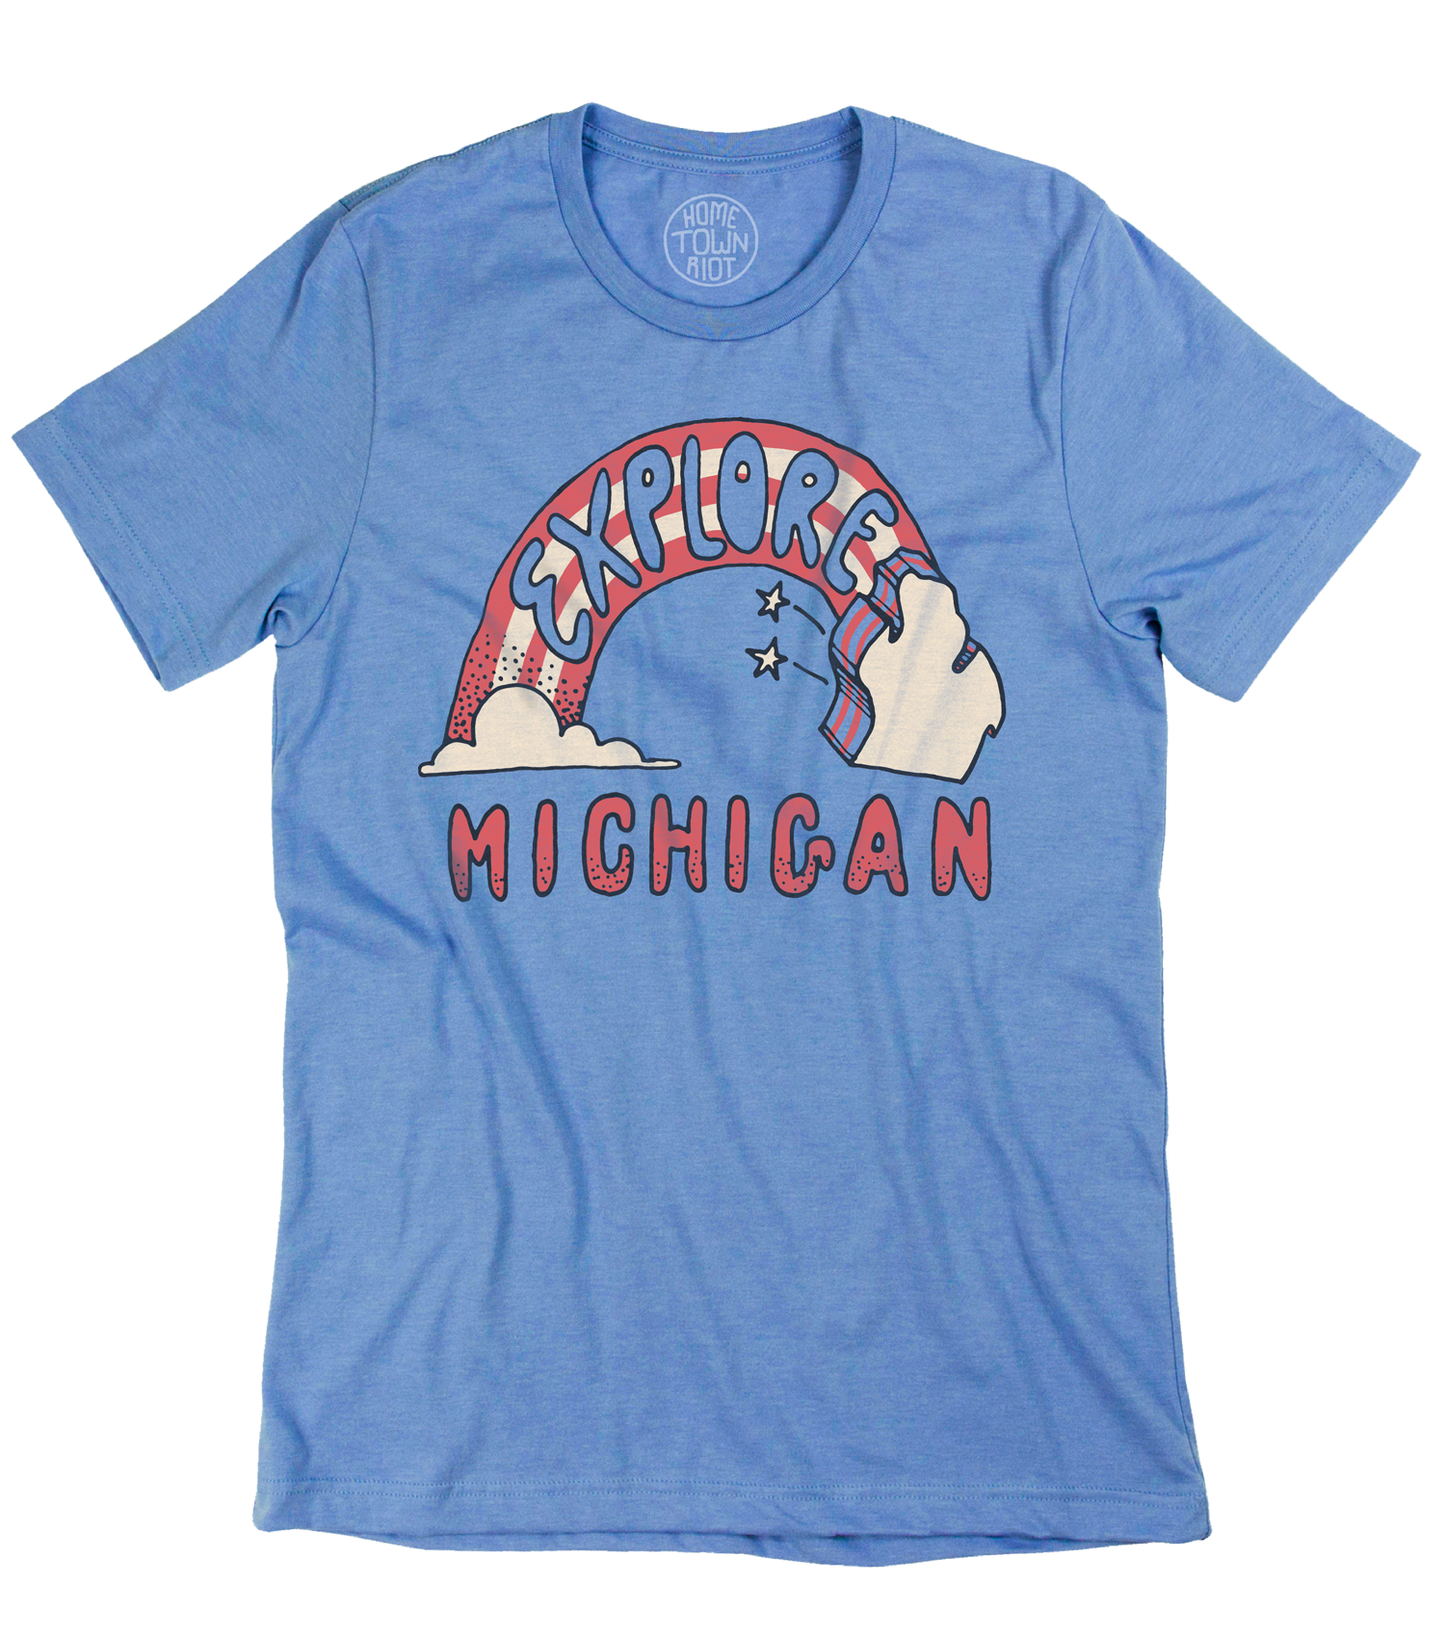 Explore Michigan Shirt